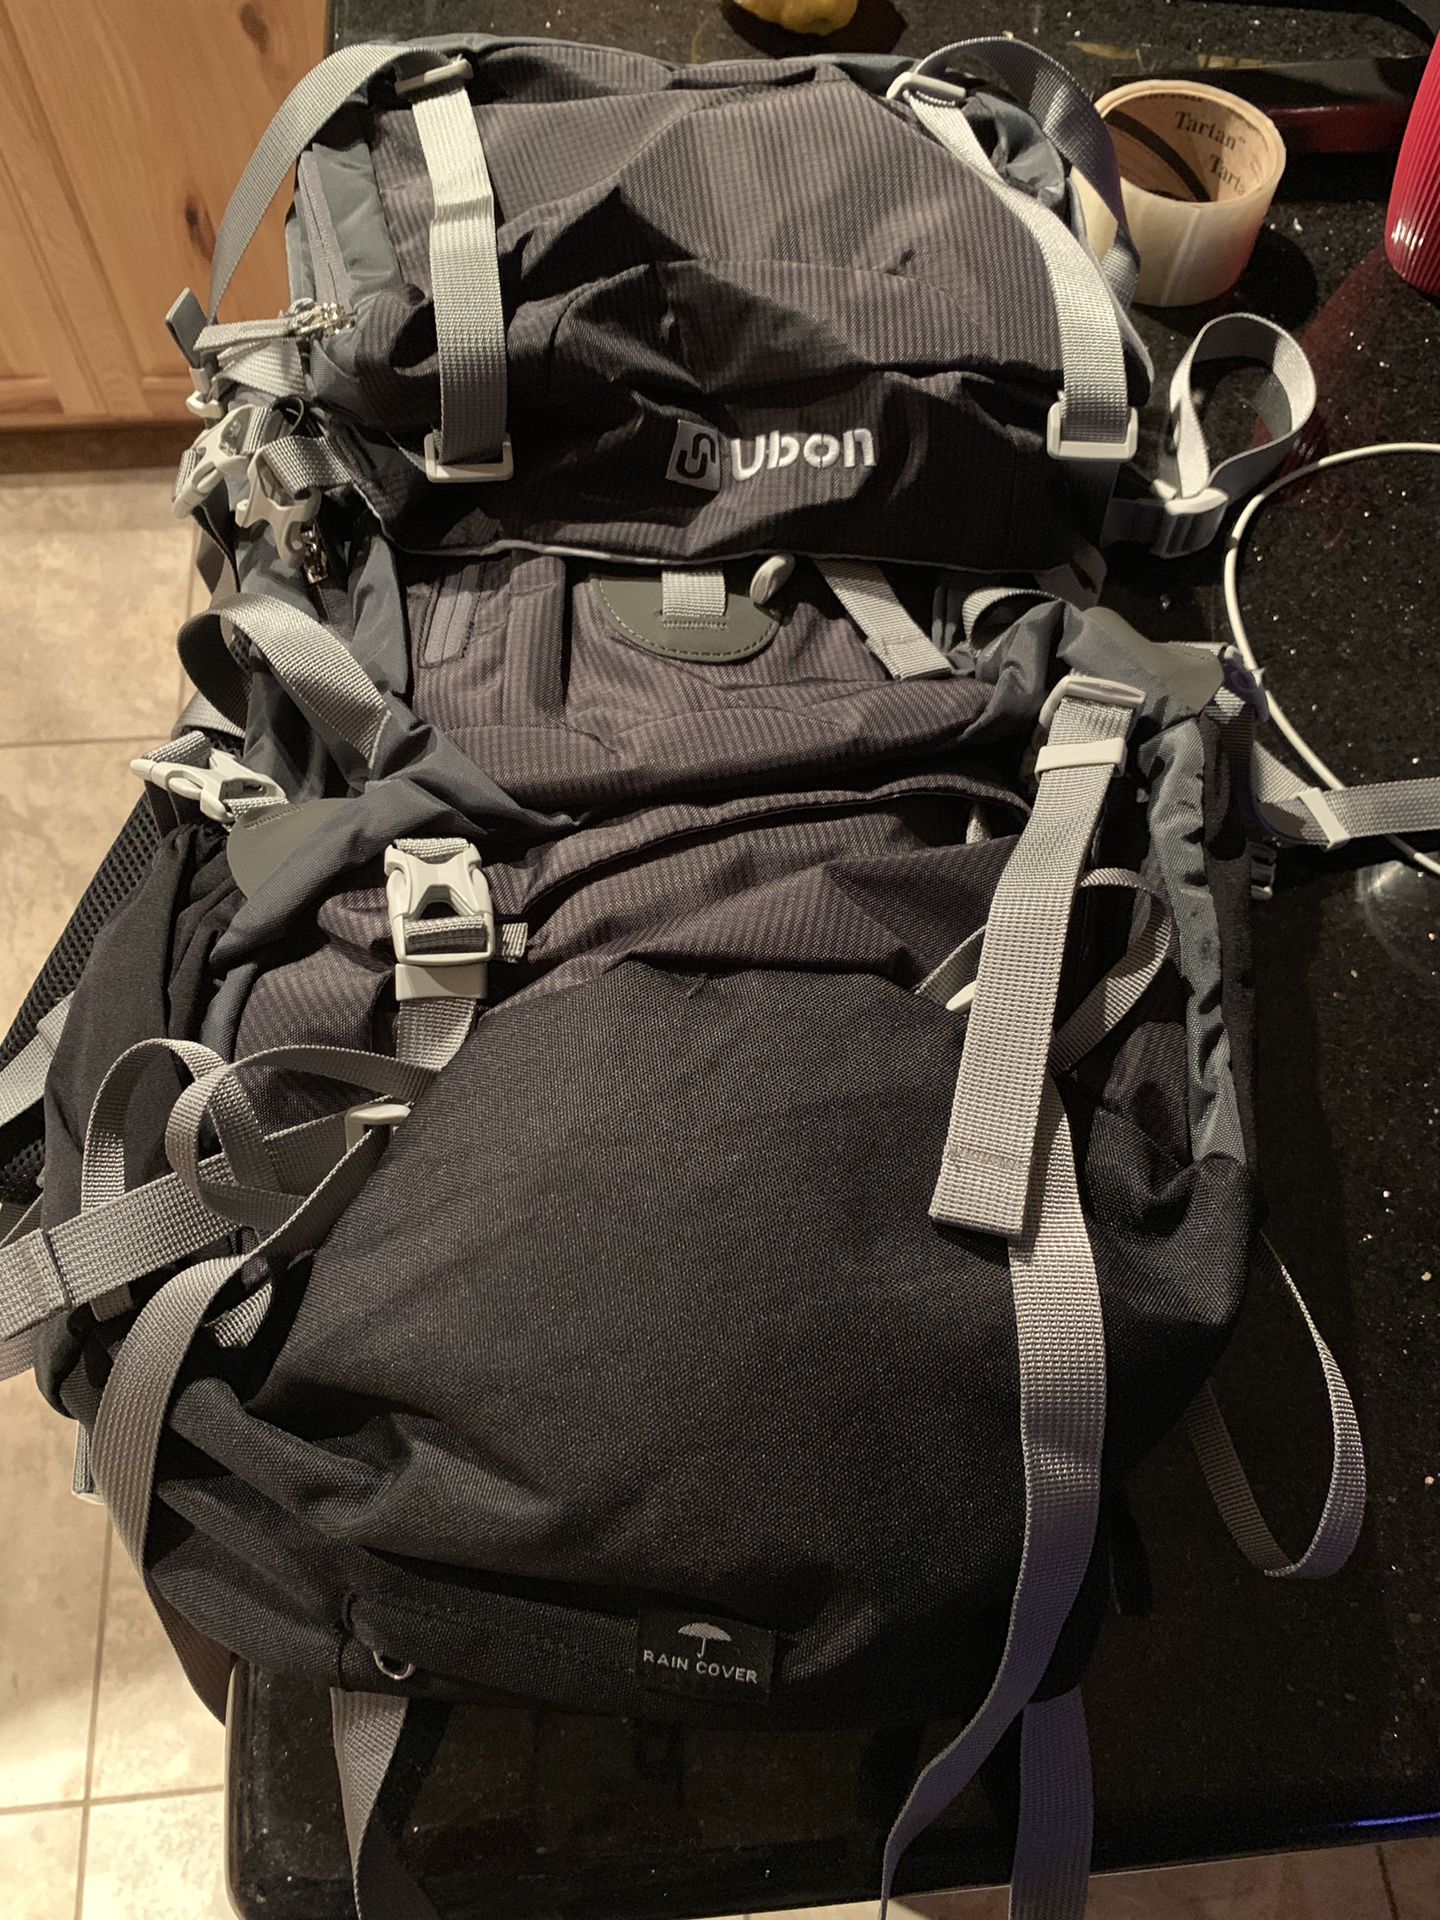 Back packing gear bundle